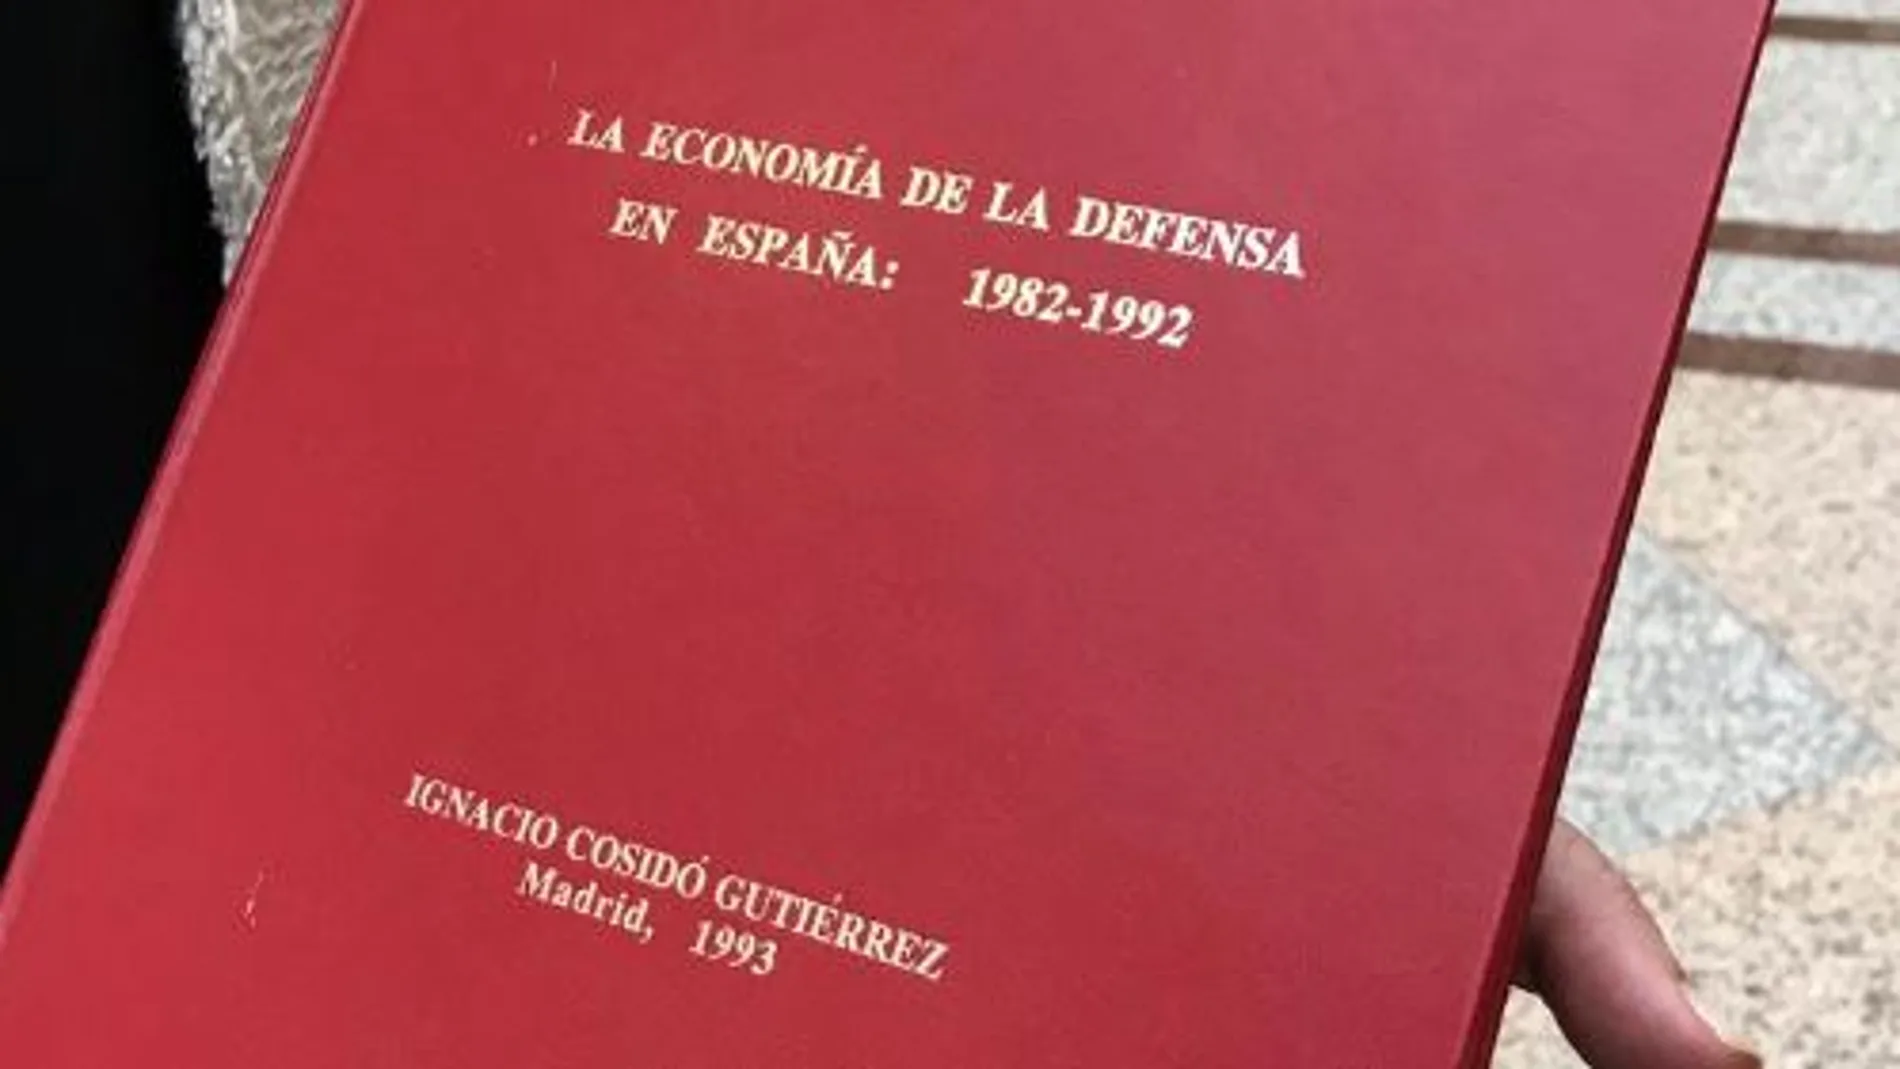 La tesis de Ignacio Cosidó